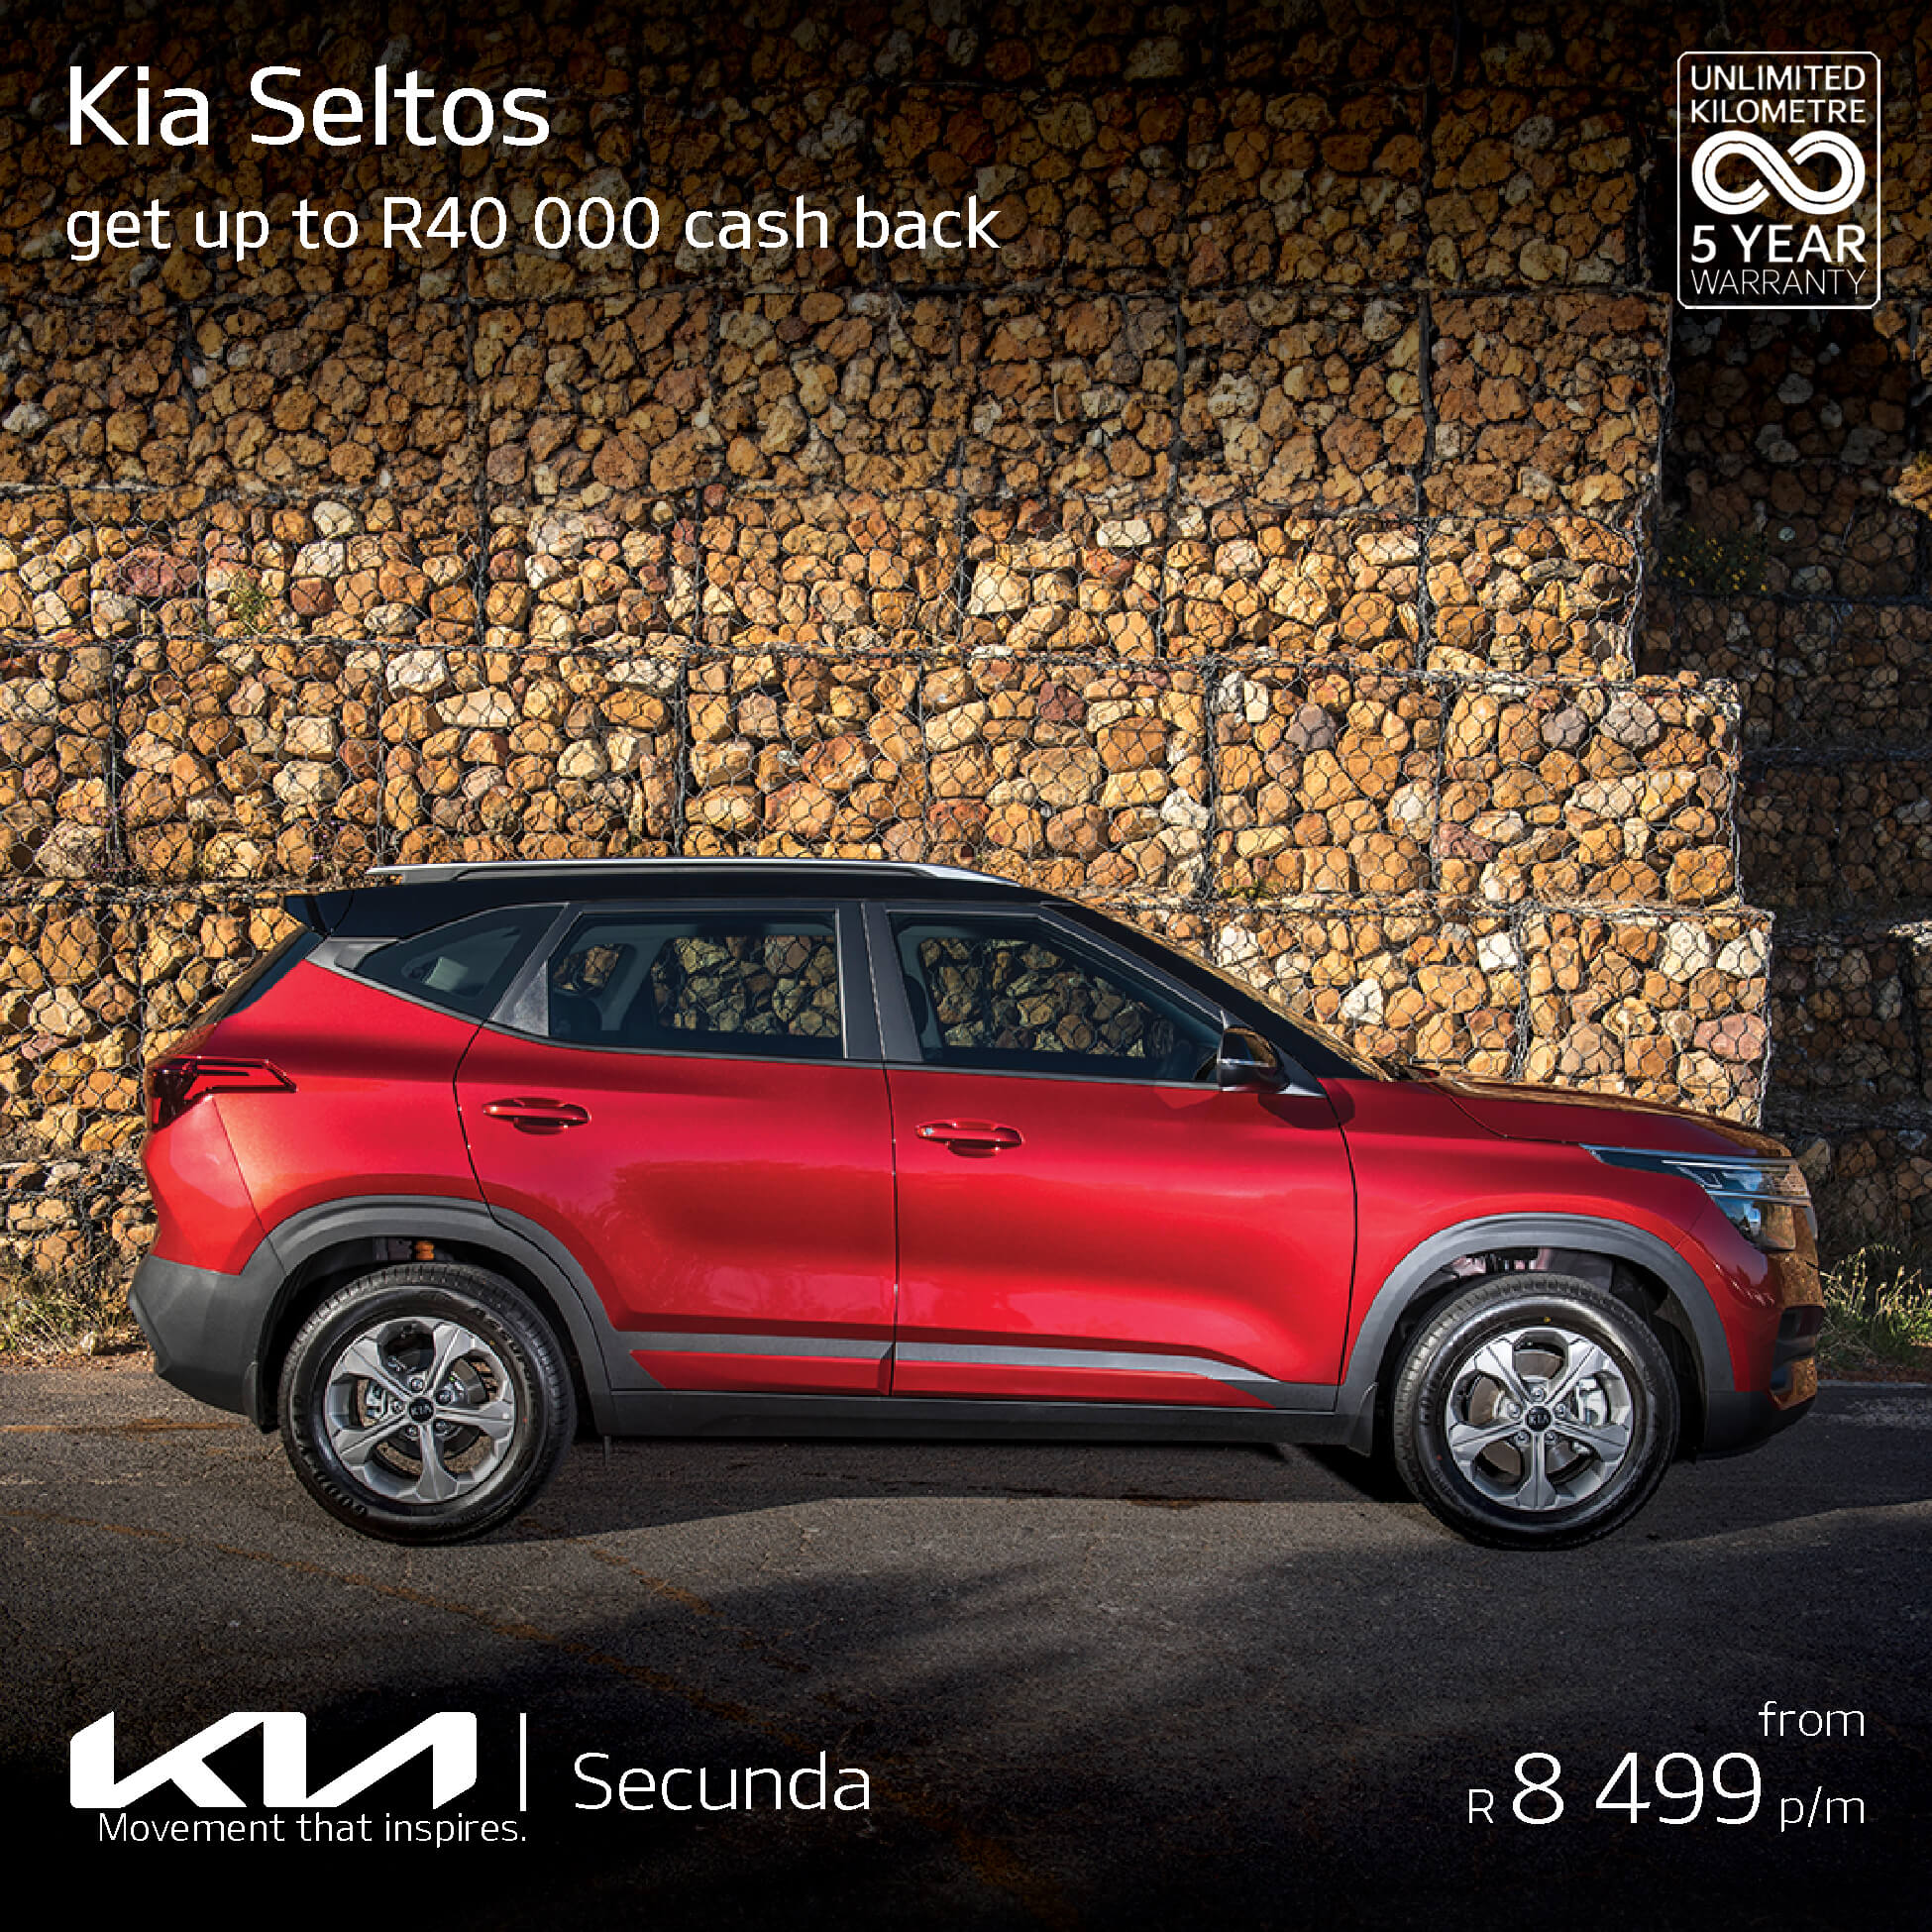 Kia Seltos image from Eastvaal Motors